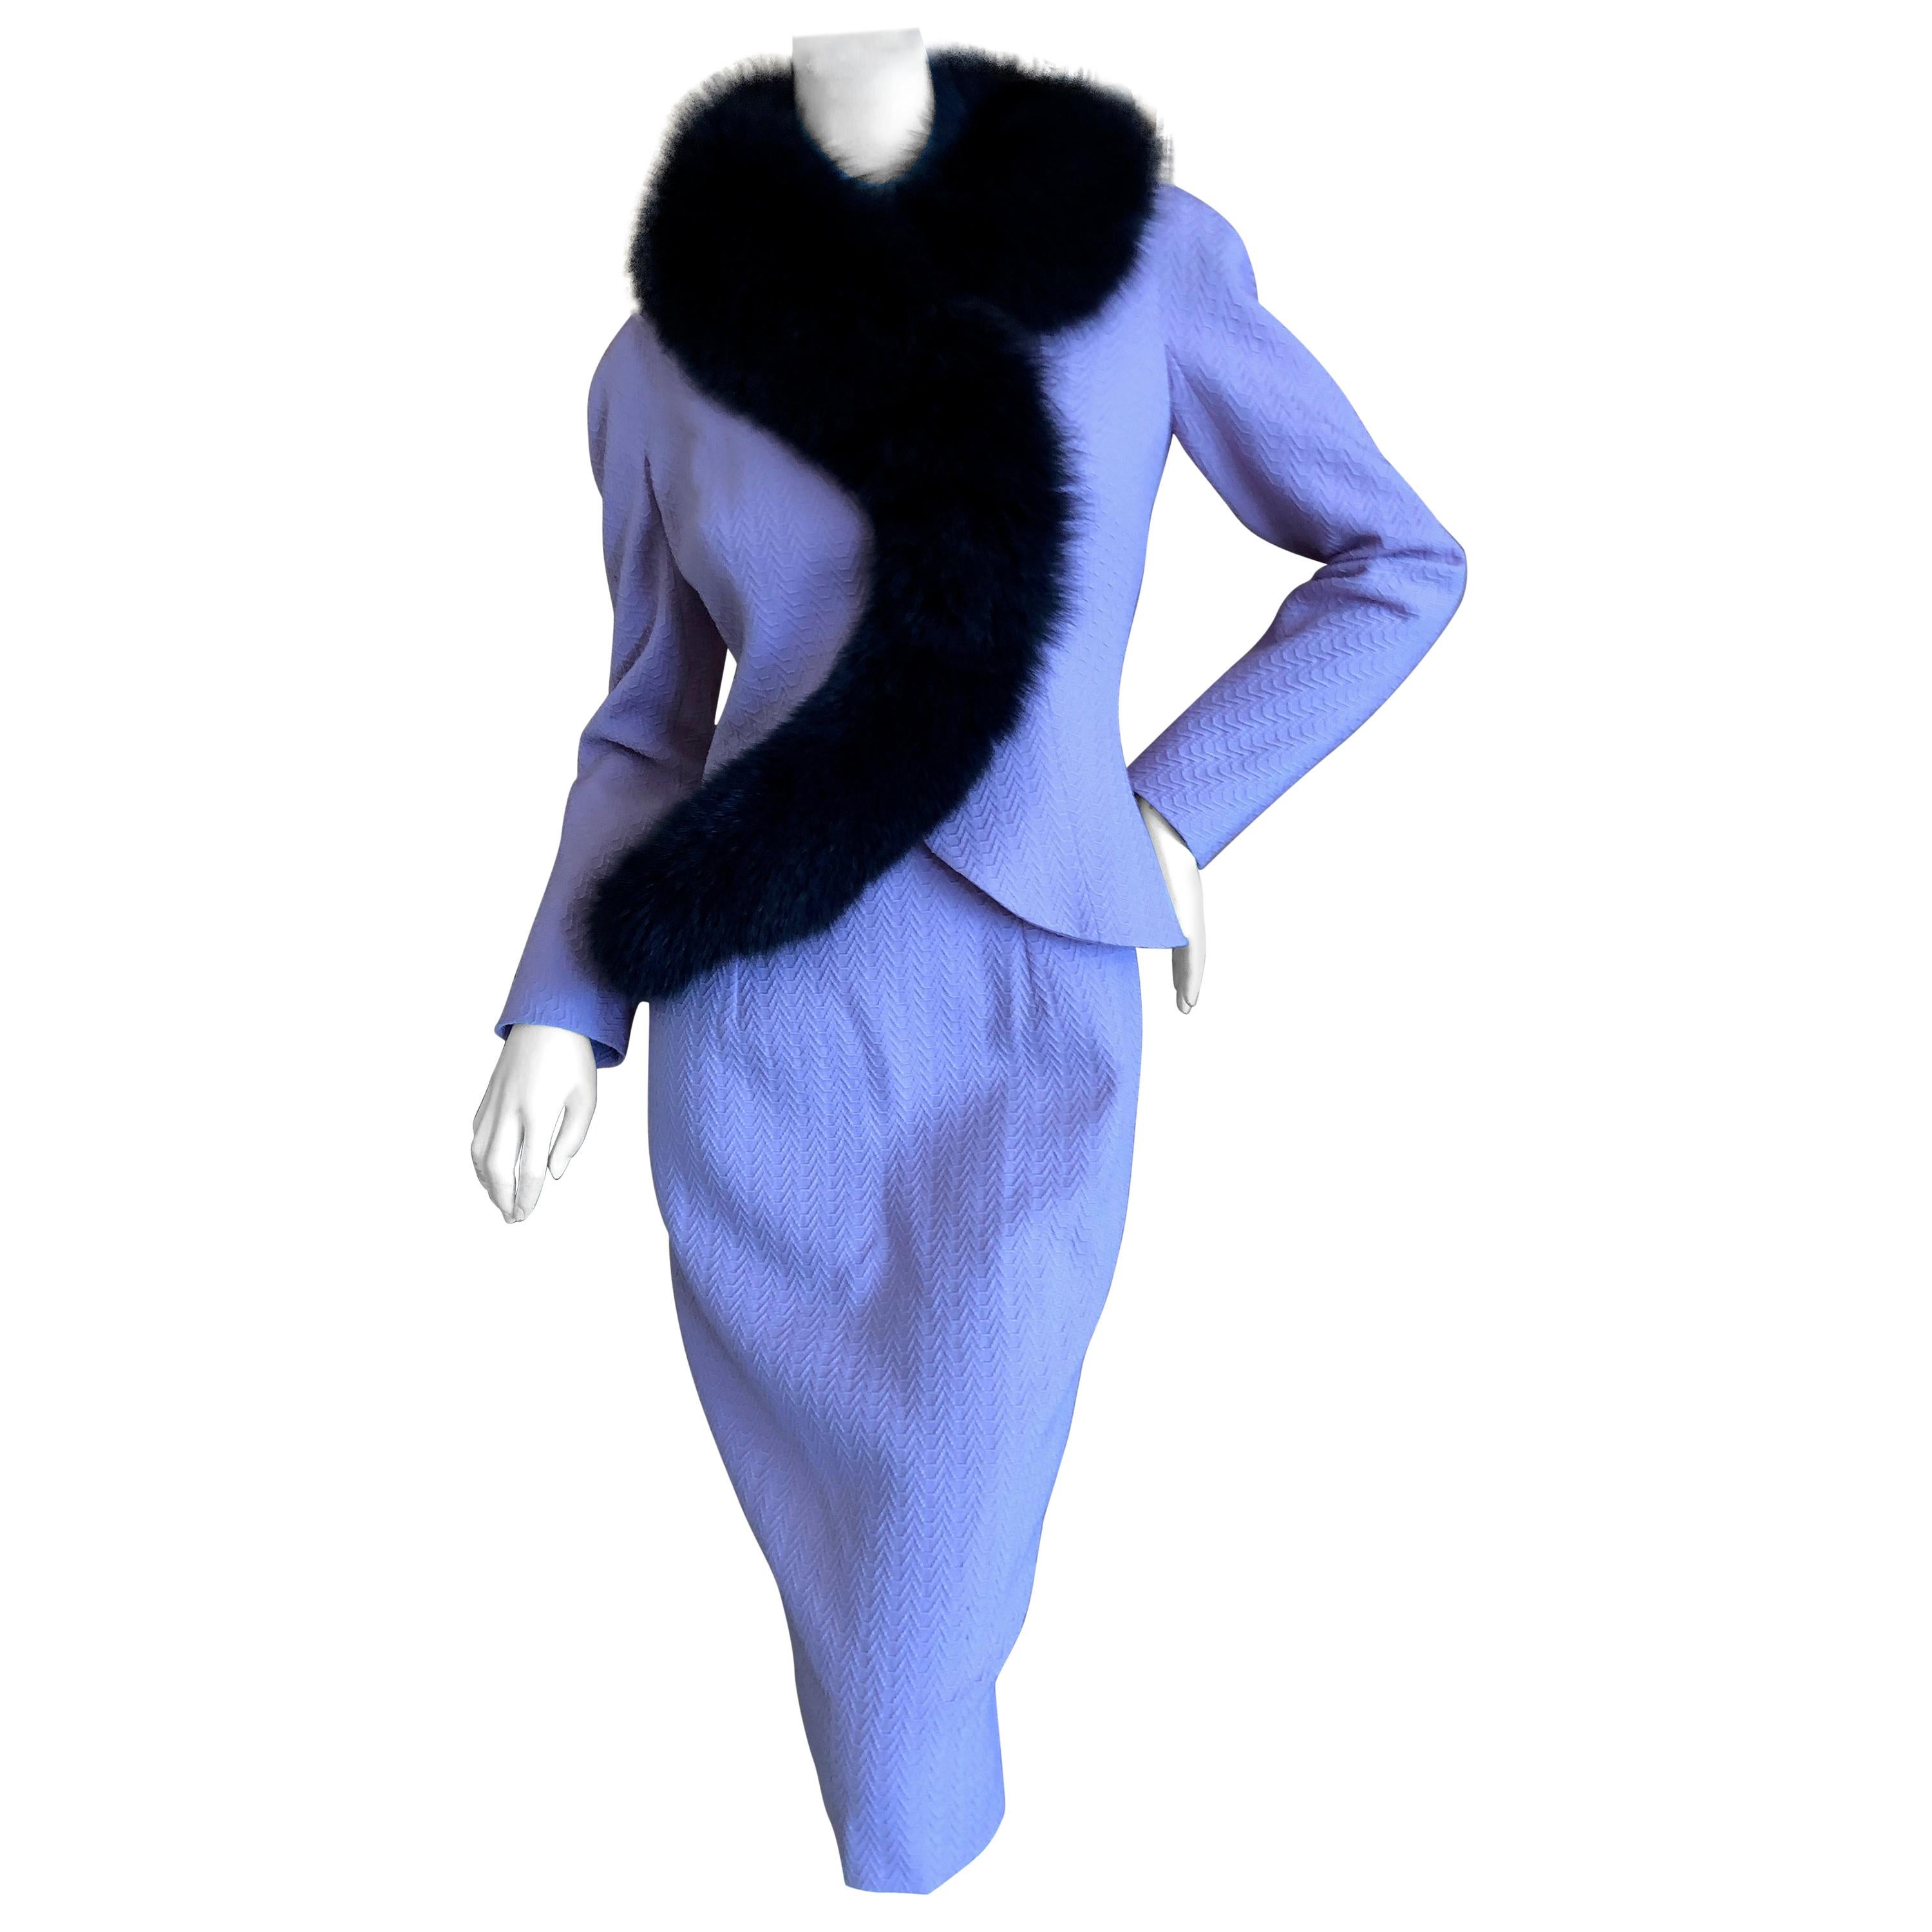  Christian Dior AW '97 by Galliano Vintage Lavender Dress w Fox Fur Trim Jacket For Sale